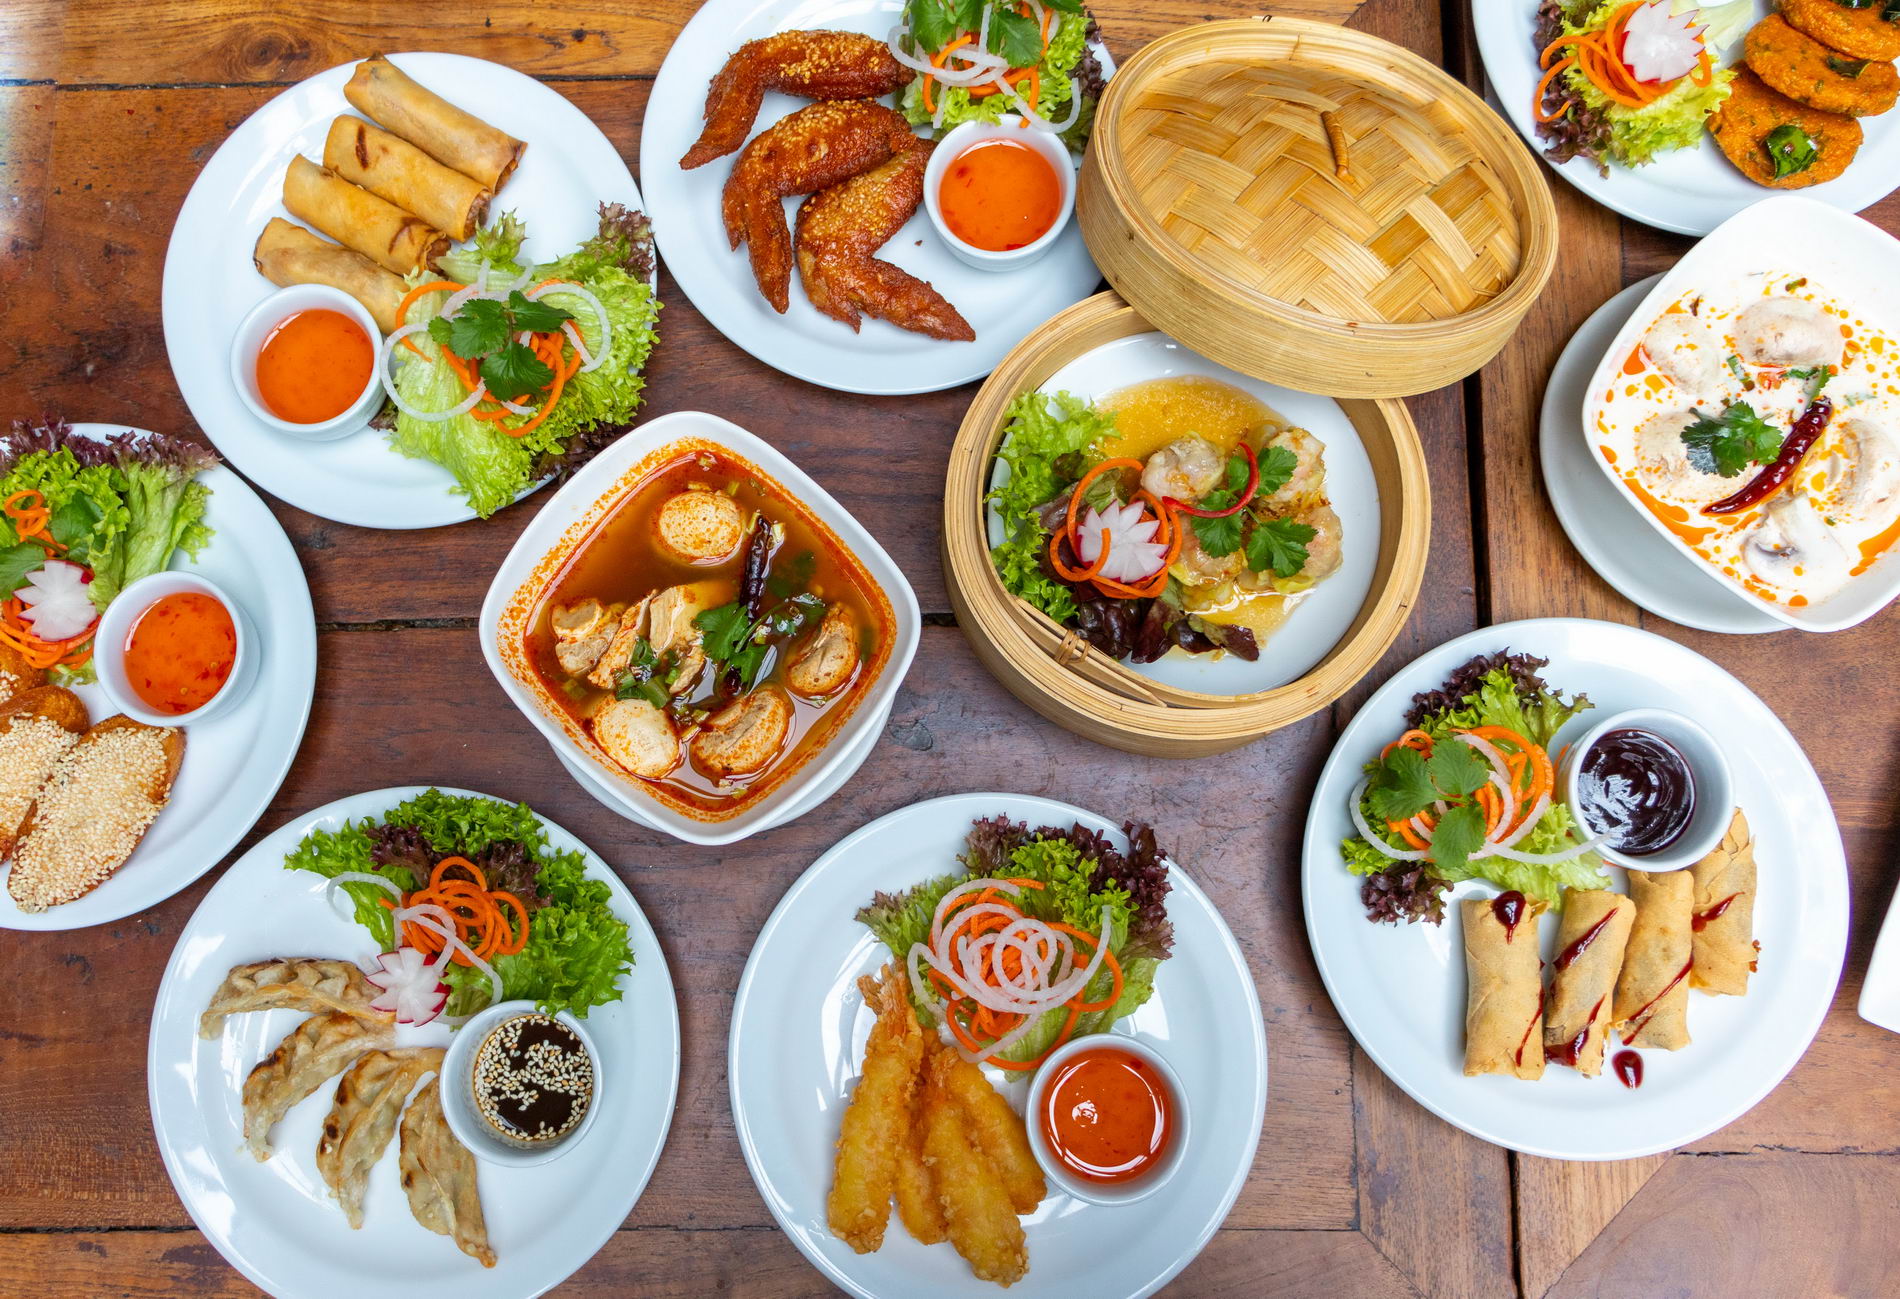 Thai Rice Restaurants – Thai Restaurants in Portbello Road, Harrow Road ...